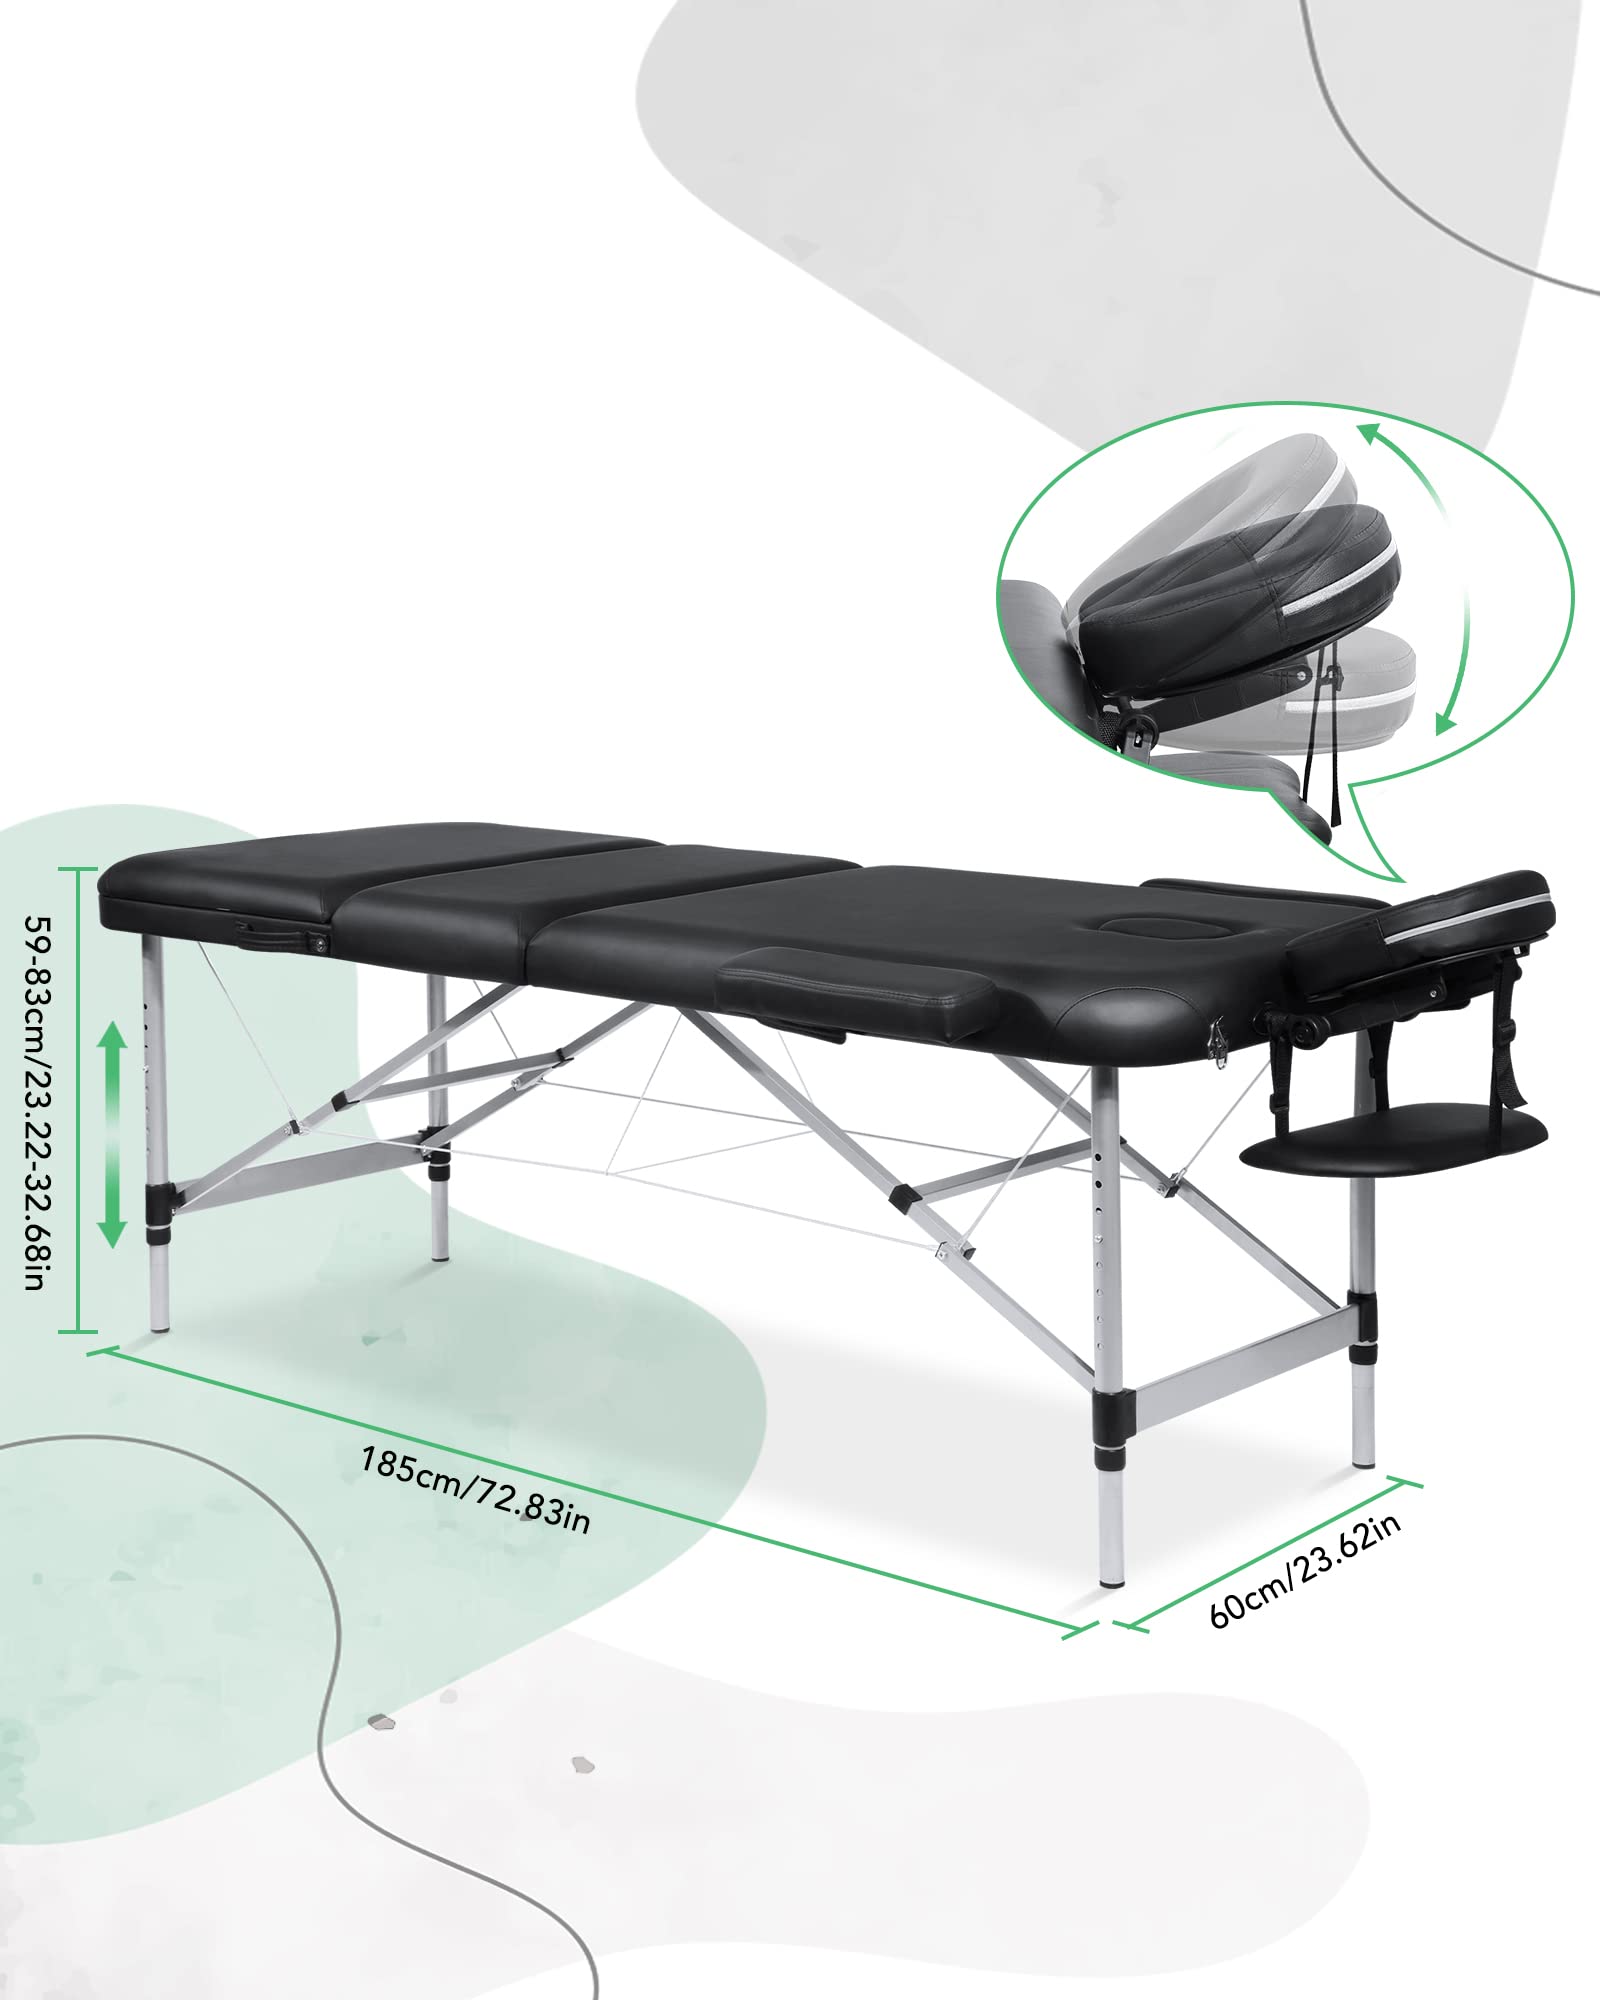 AMZ Paper Roll Holder for Massage Table Adjustable Size 26, 30, 34 Inches.  Black Paper Roll Holder for Massage Tables. Aluminum Massage Table Paper